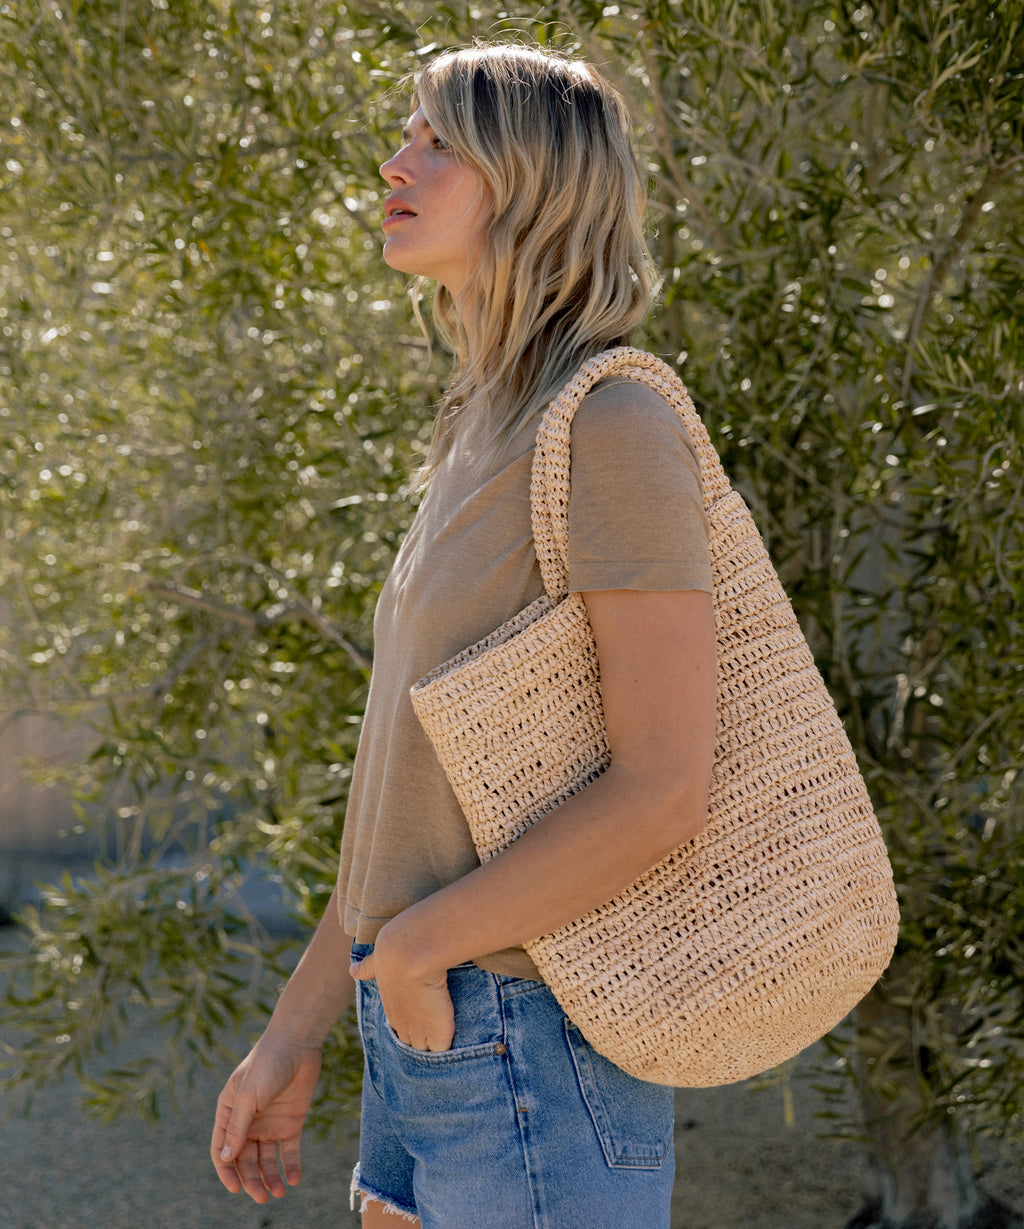 Jenni Kayne Women's Crochet Raffia Sun Hat Size Small/Medium